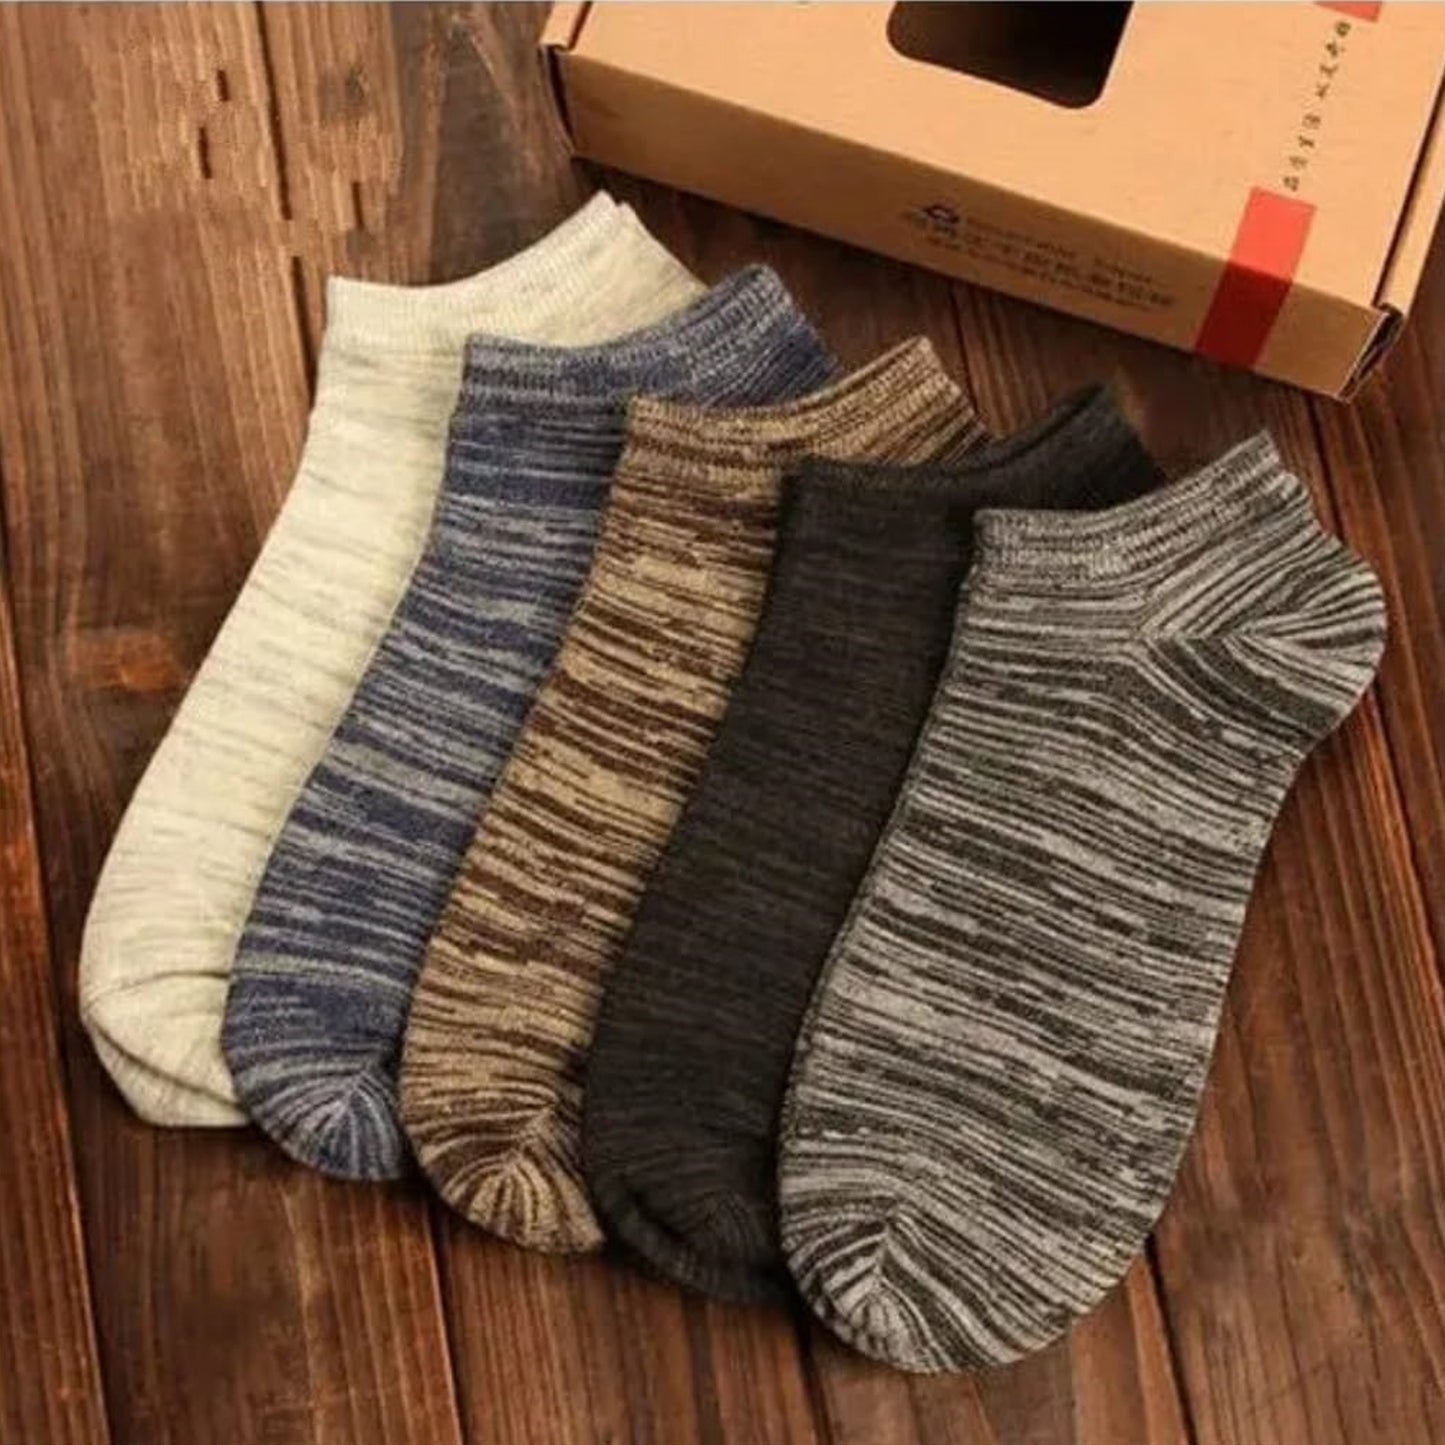 5 Pair/Set Cotton Socks